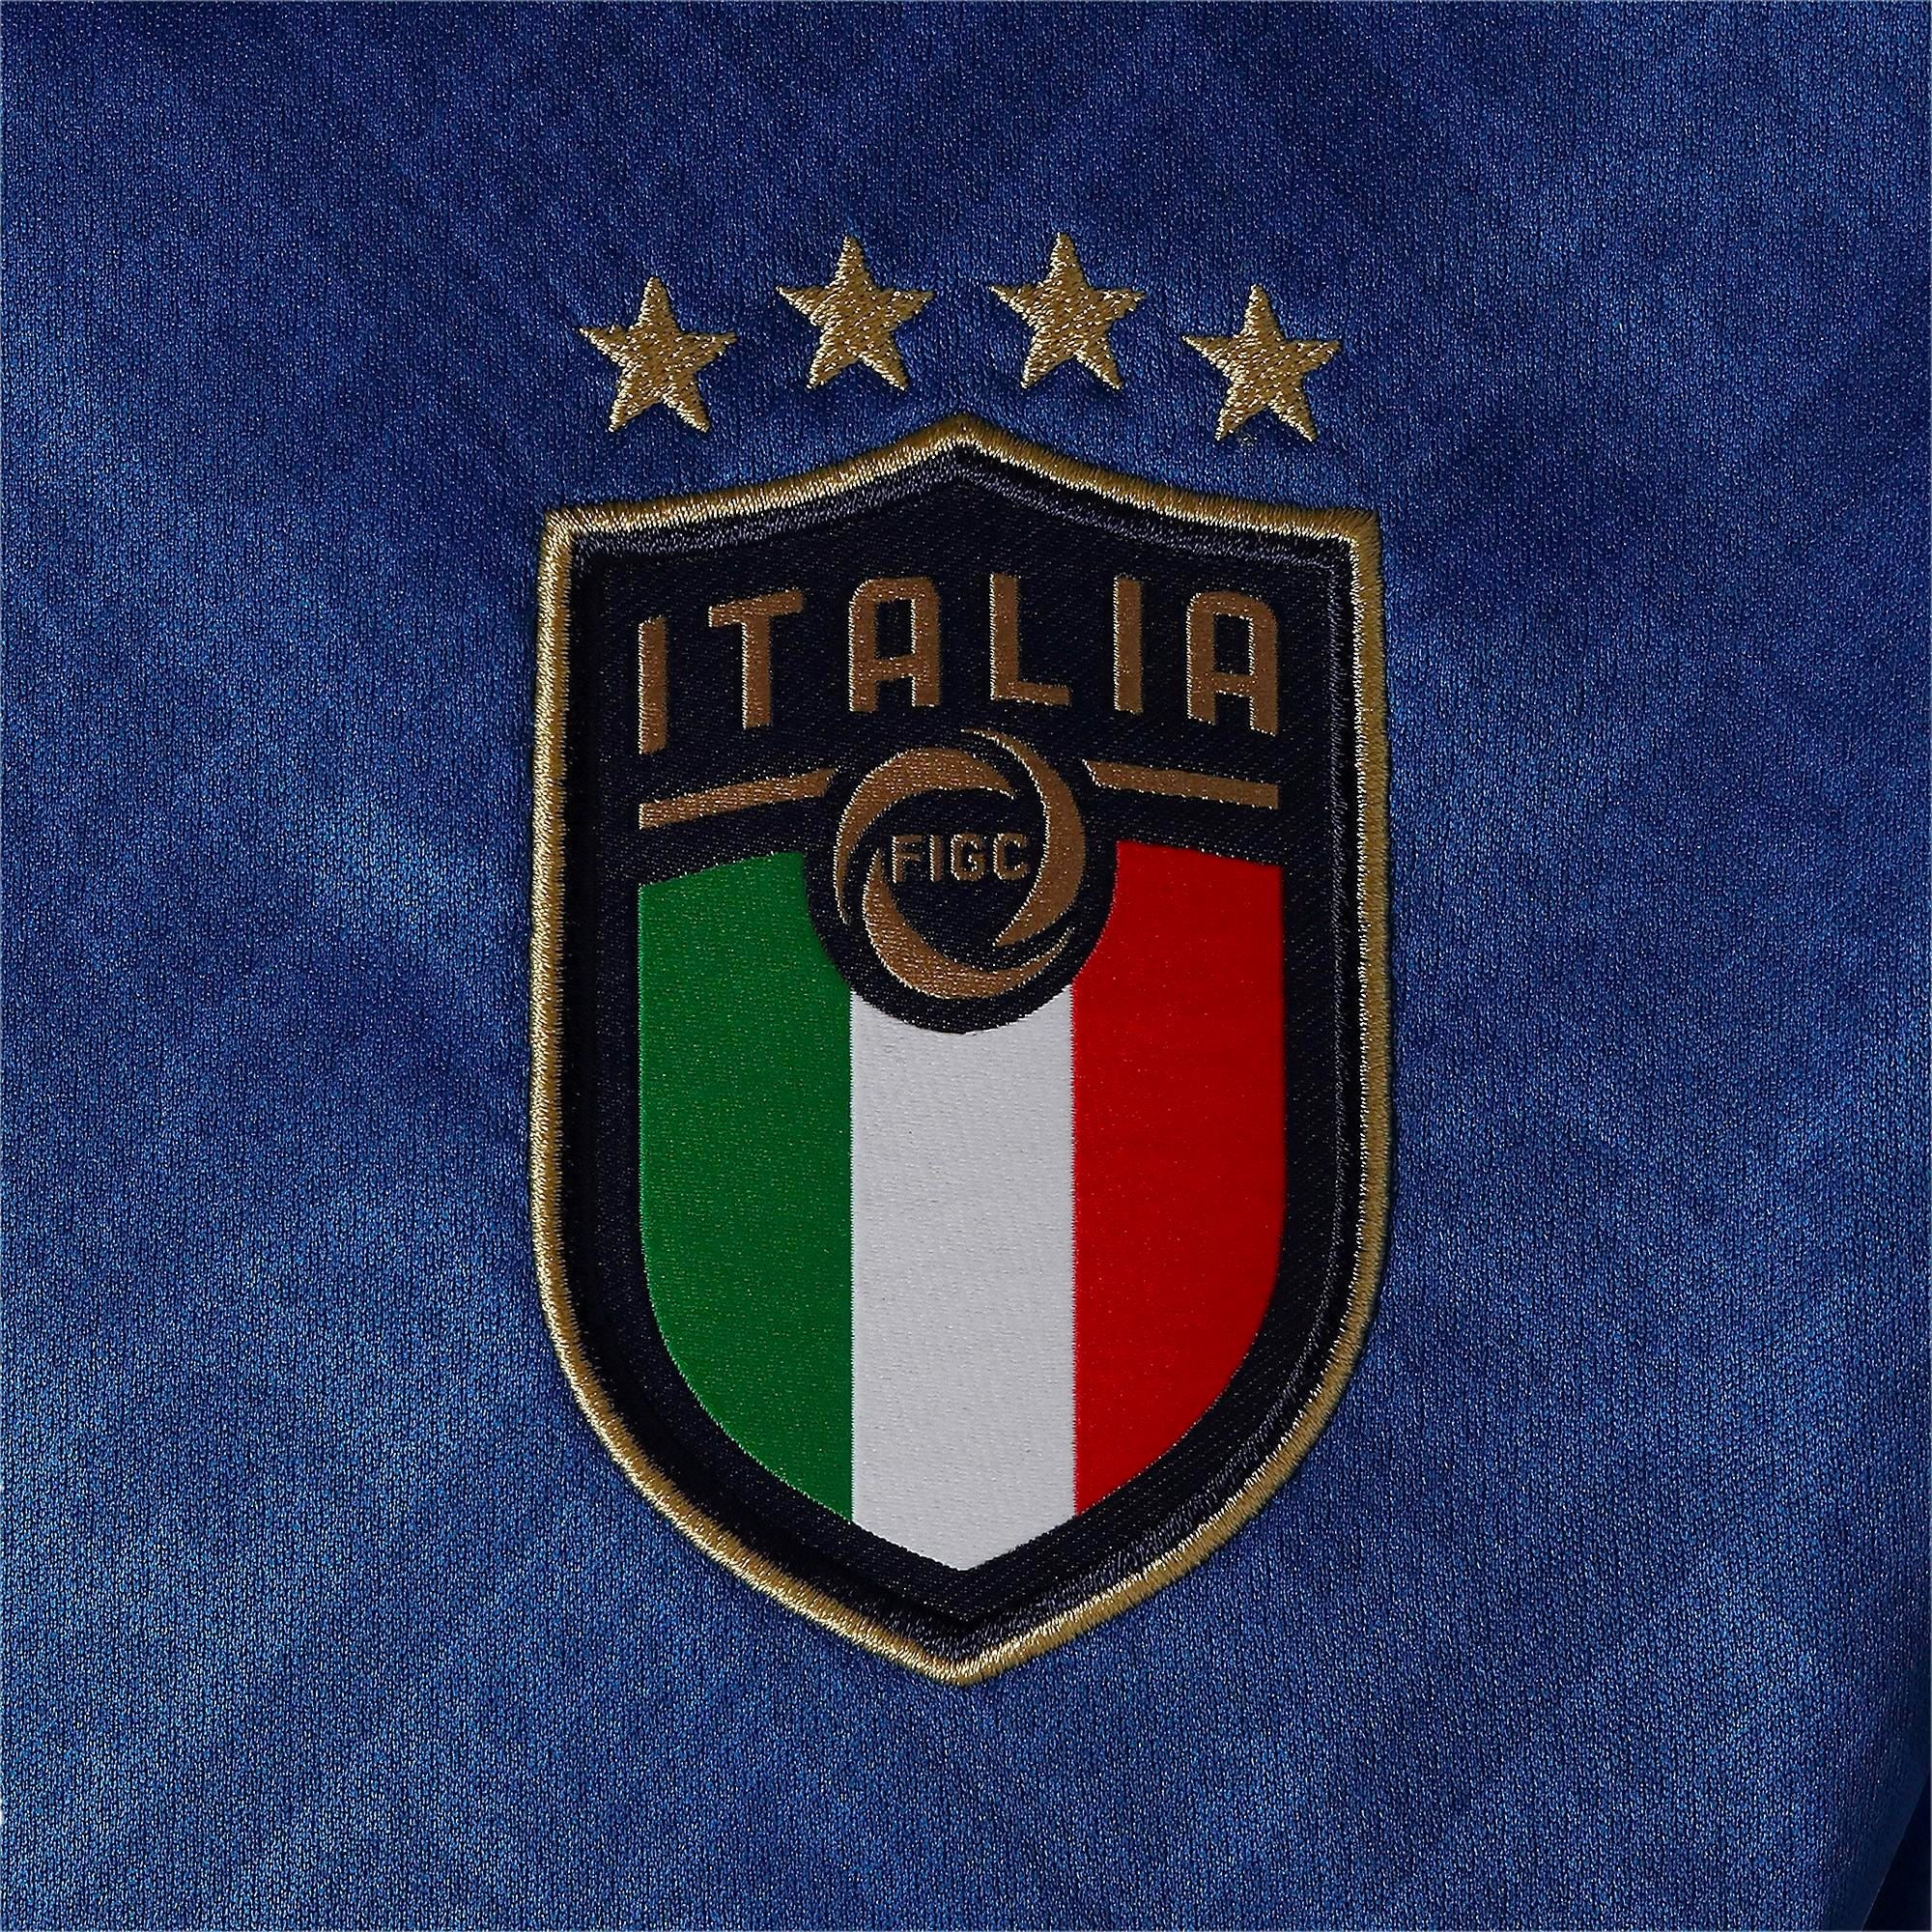 Italy Euro Champions Winners Jersey - ITASPORT